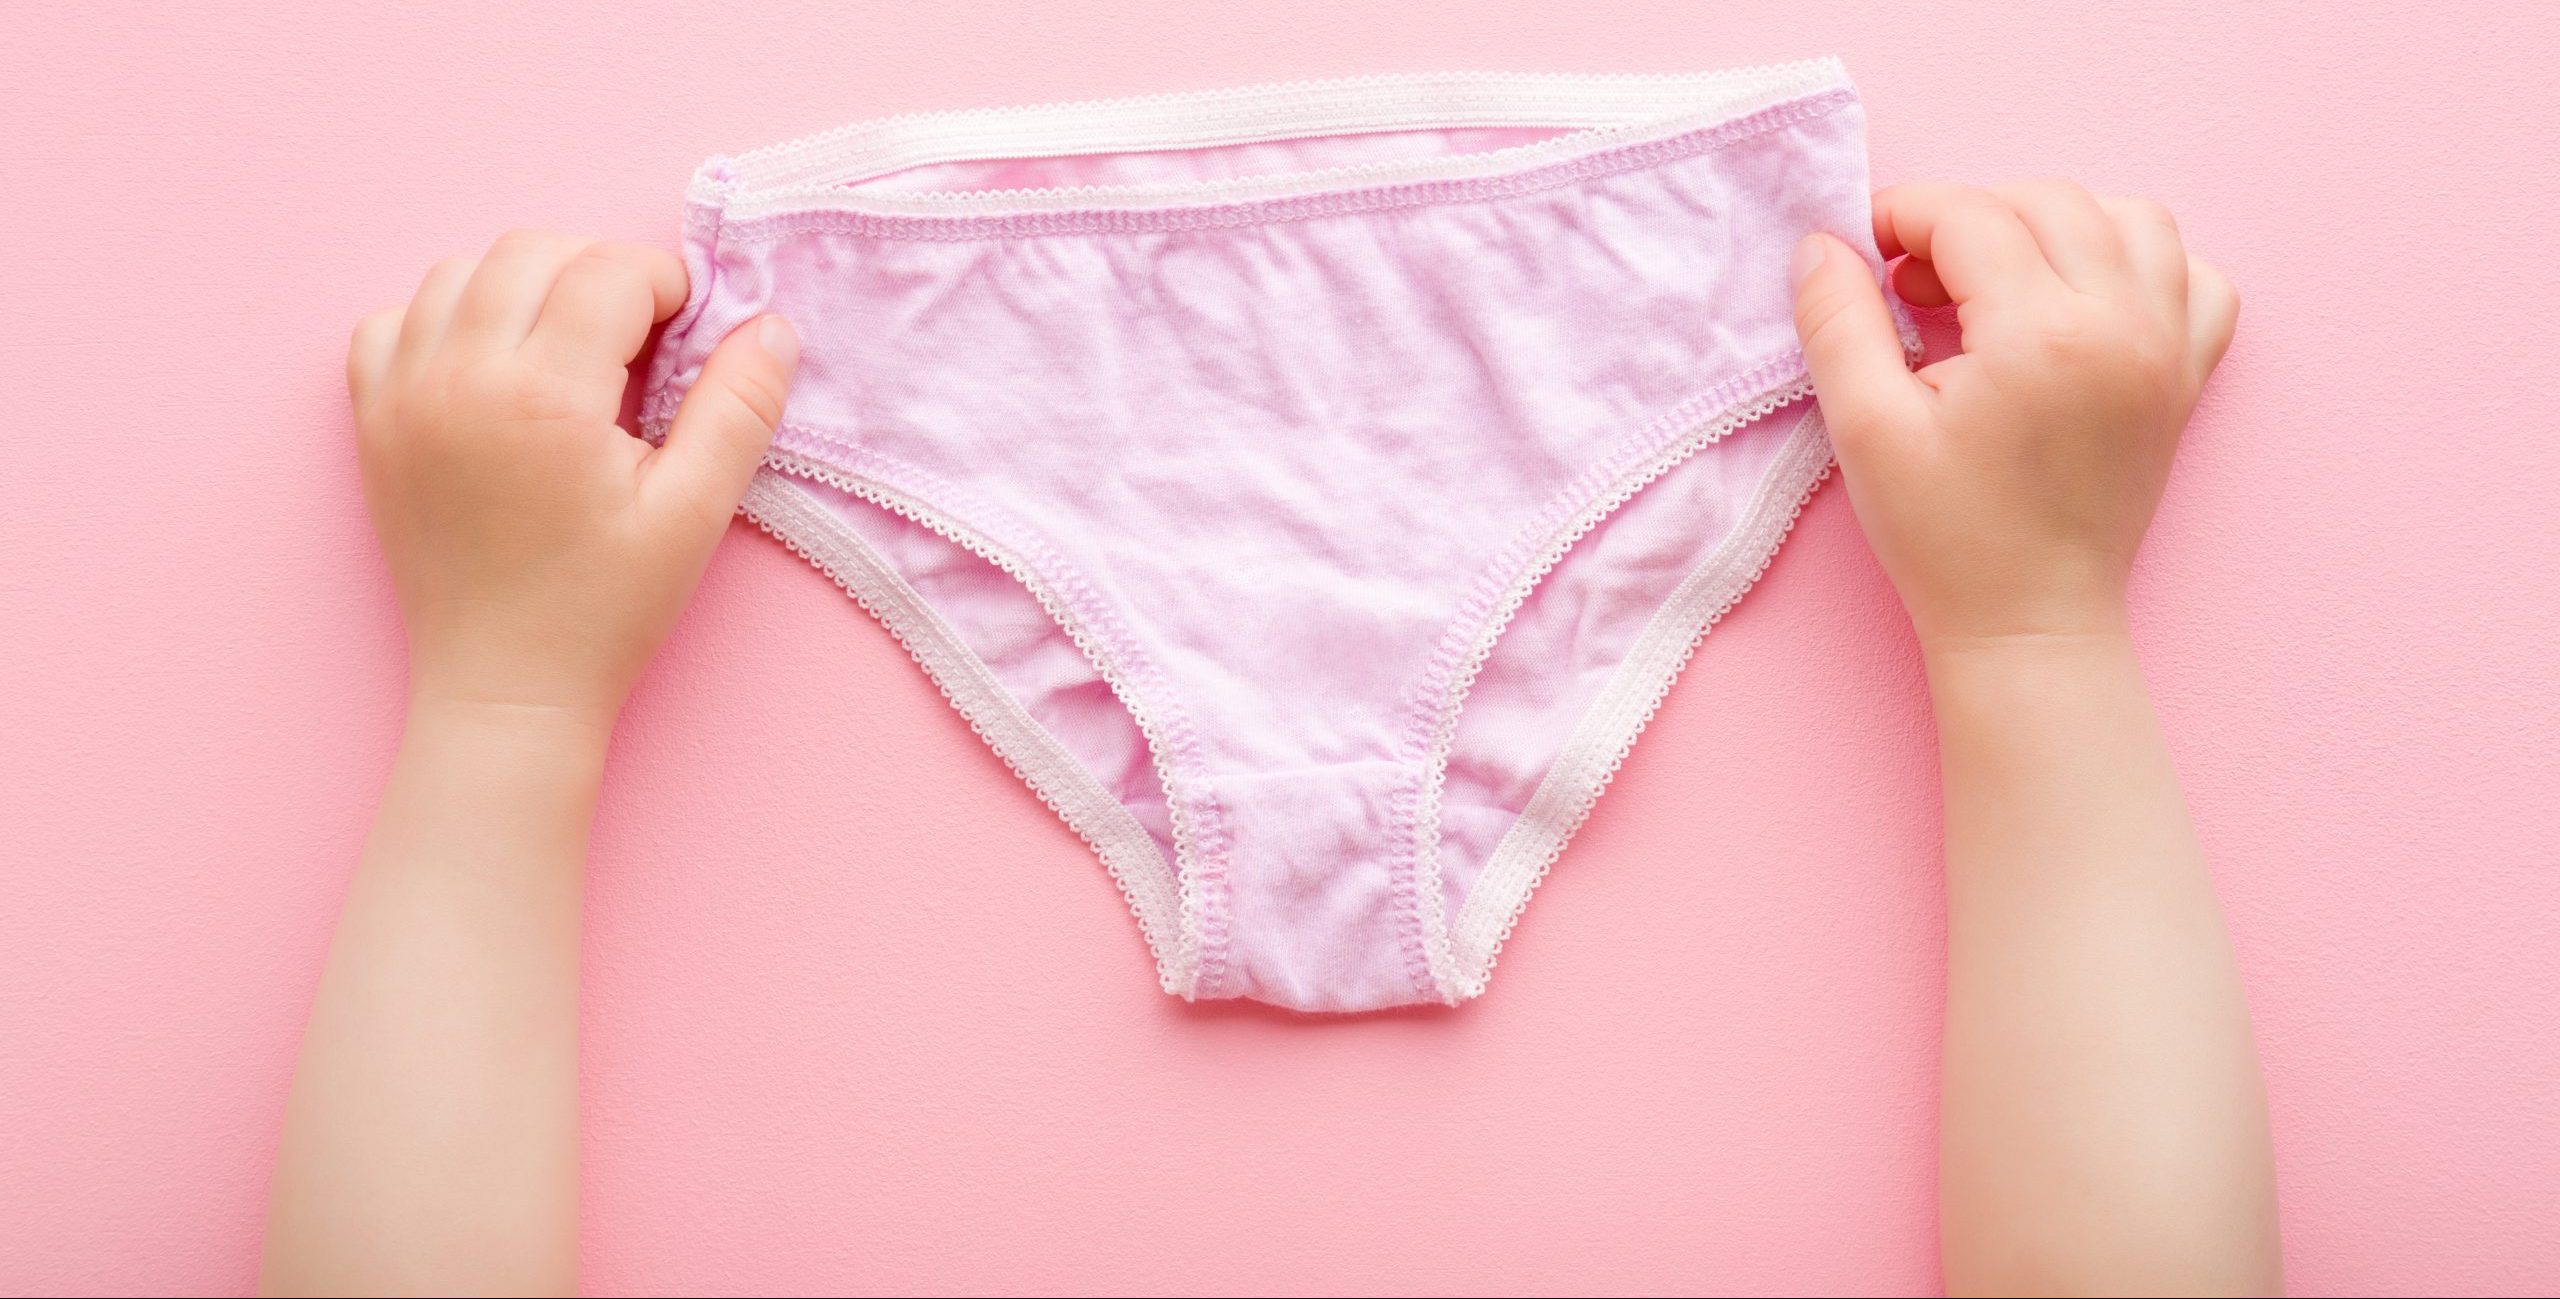 Carter's No-Pinch Elastic Waistband Big Girls' Underwear, 8-Count